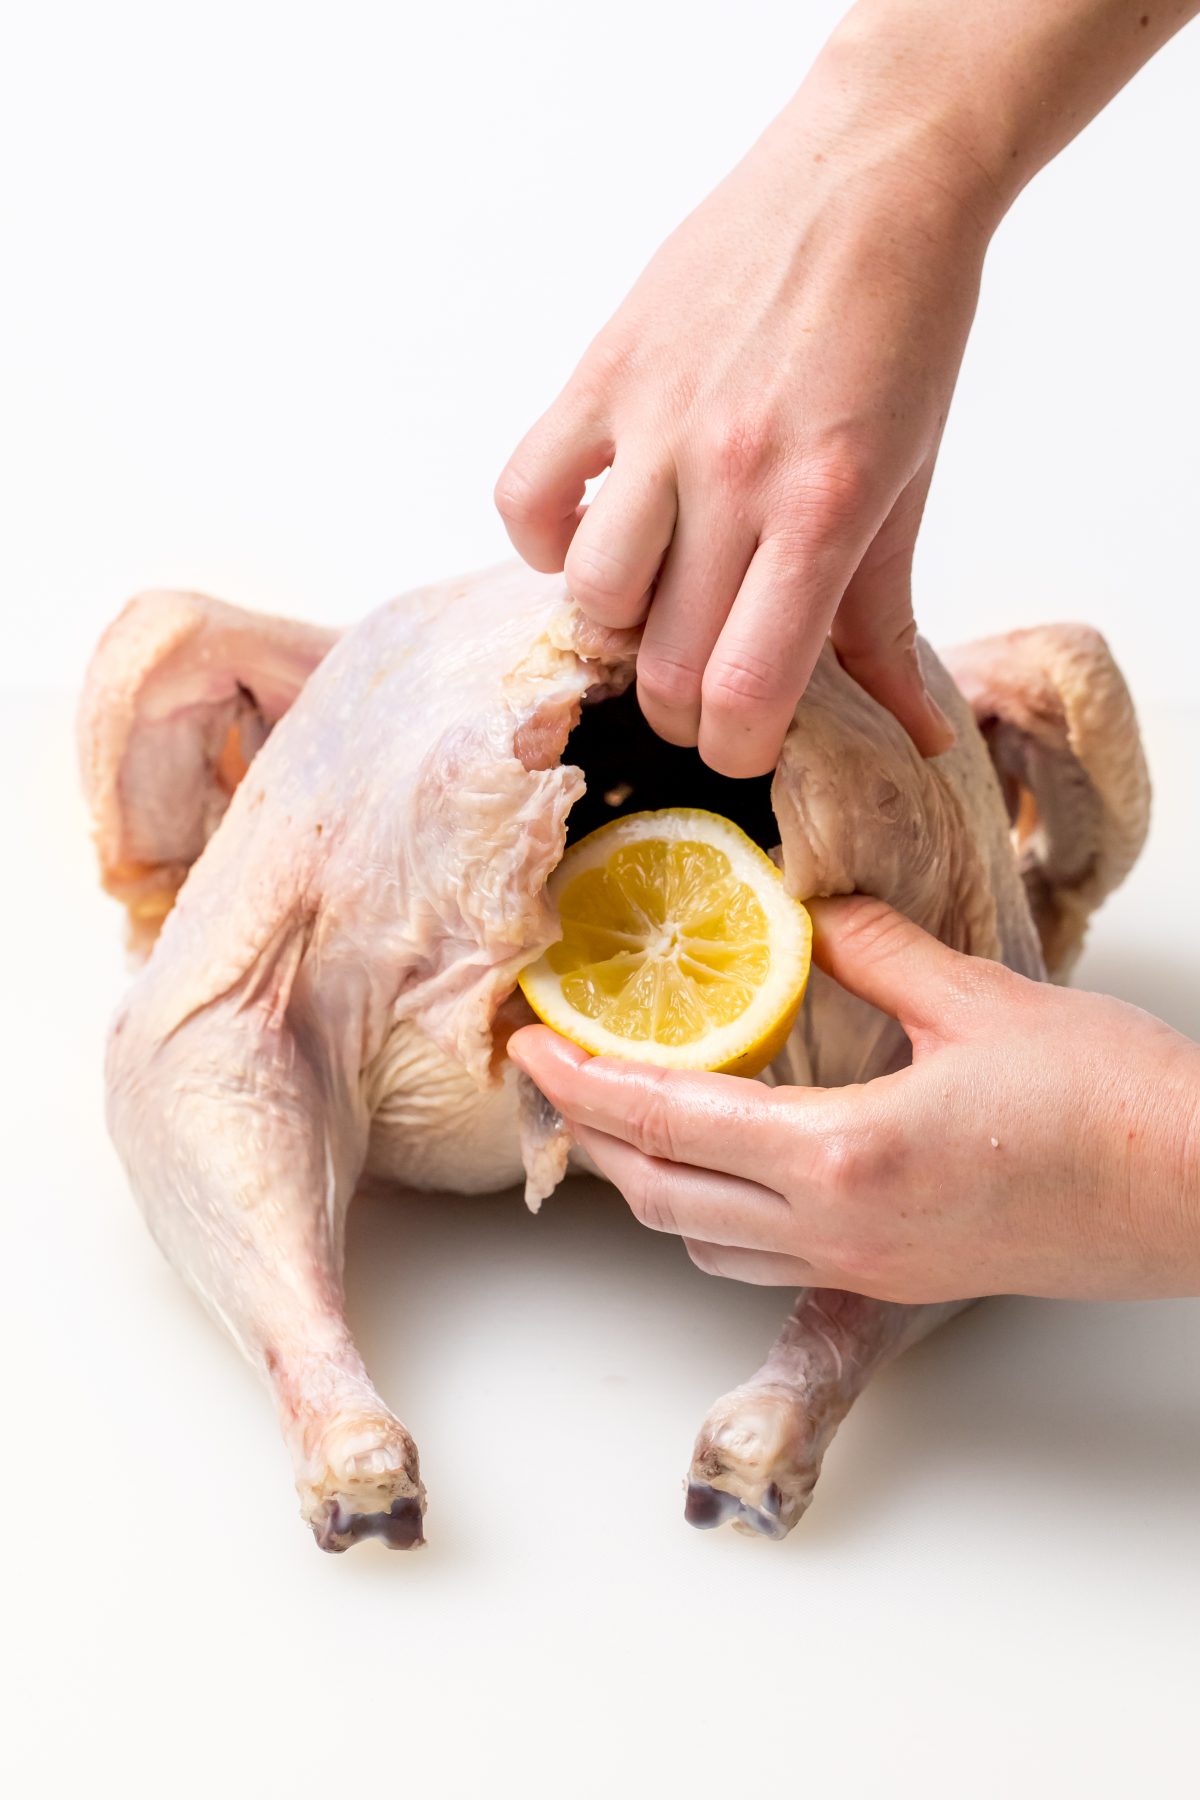 5D4B2276 - James Beard Roasted Turkey - inserting lemon into turkey cavity